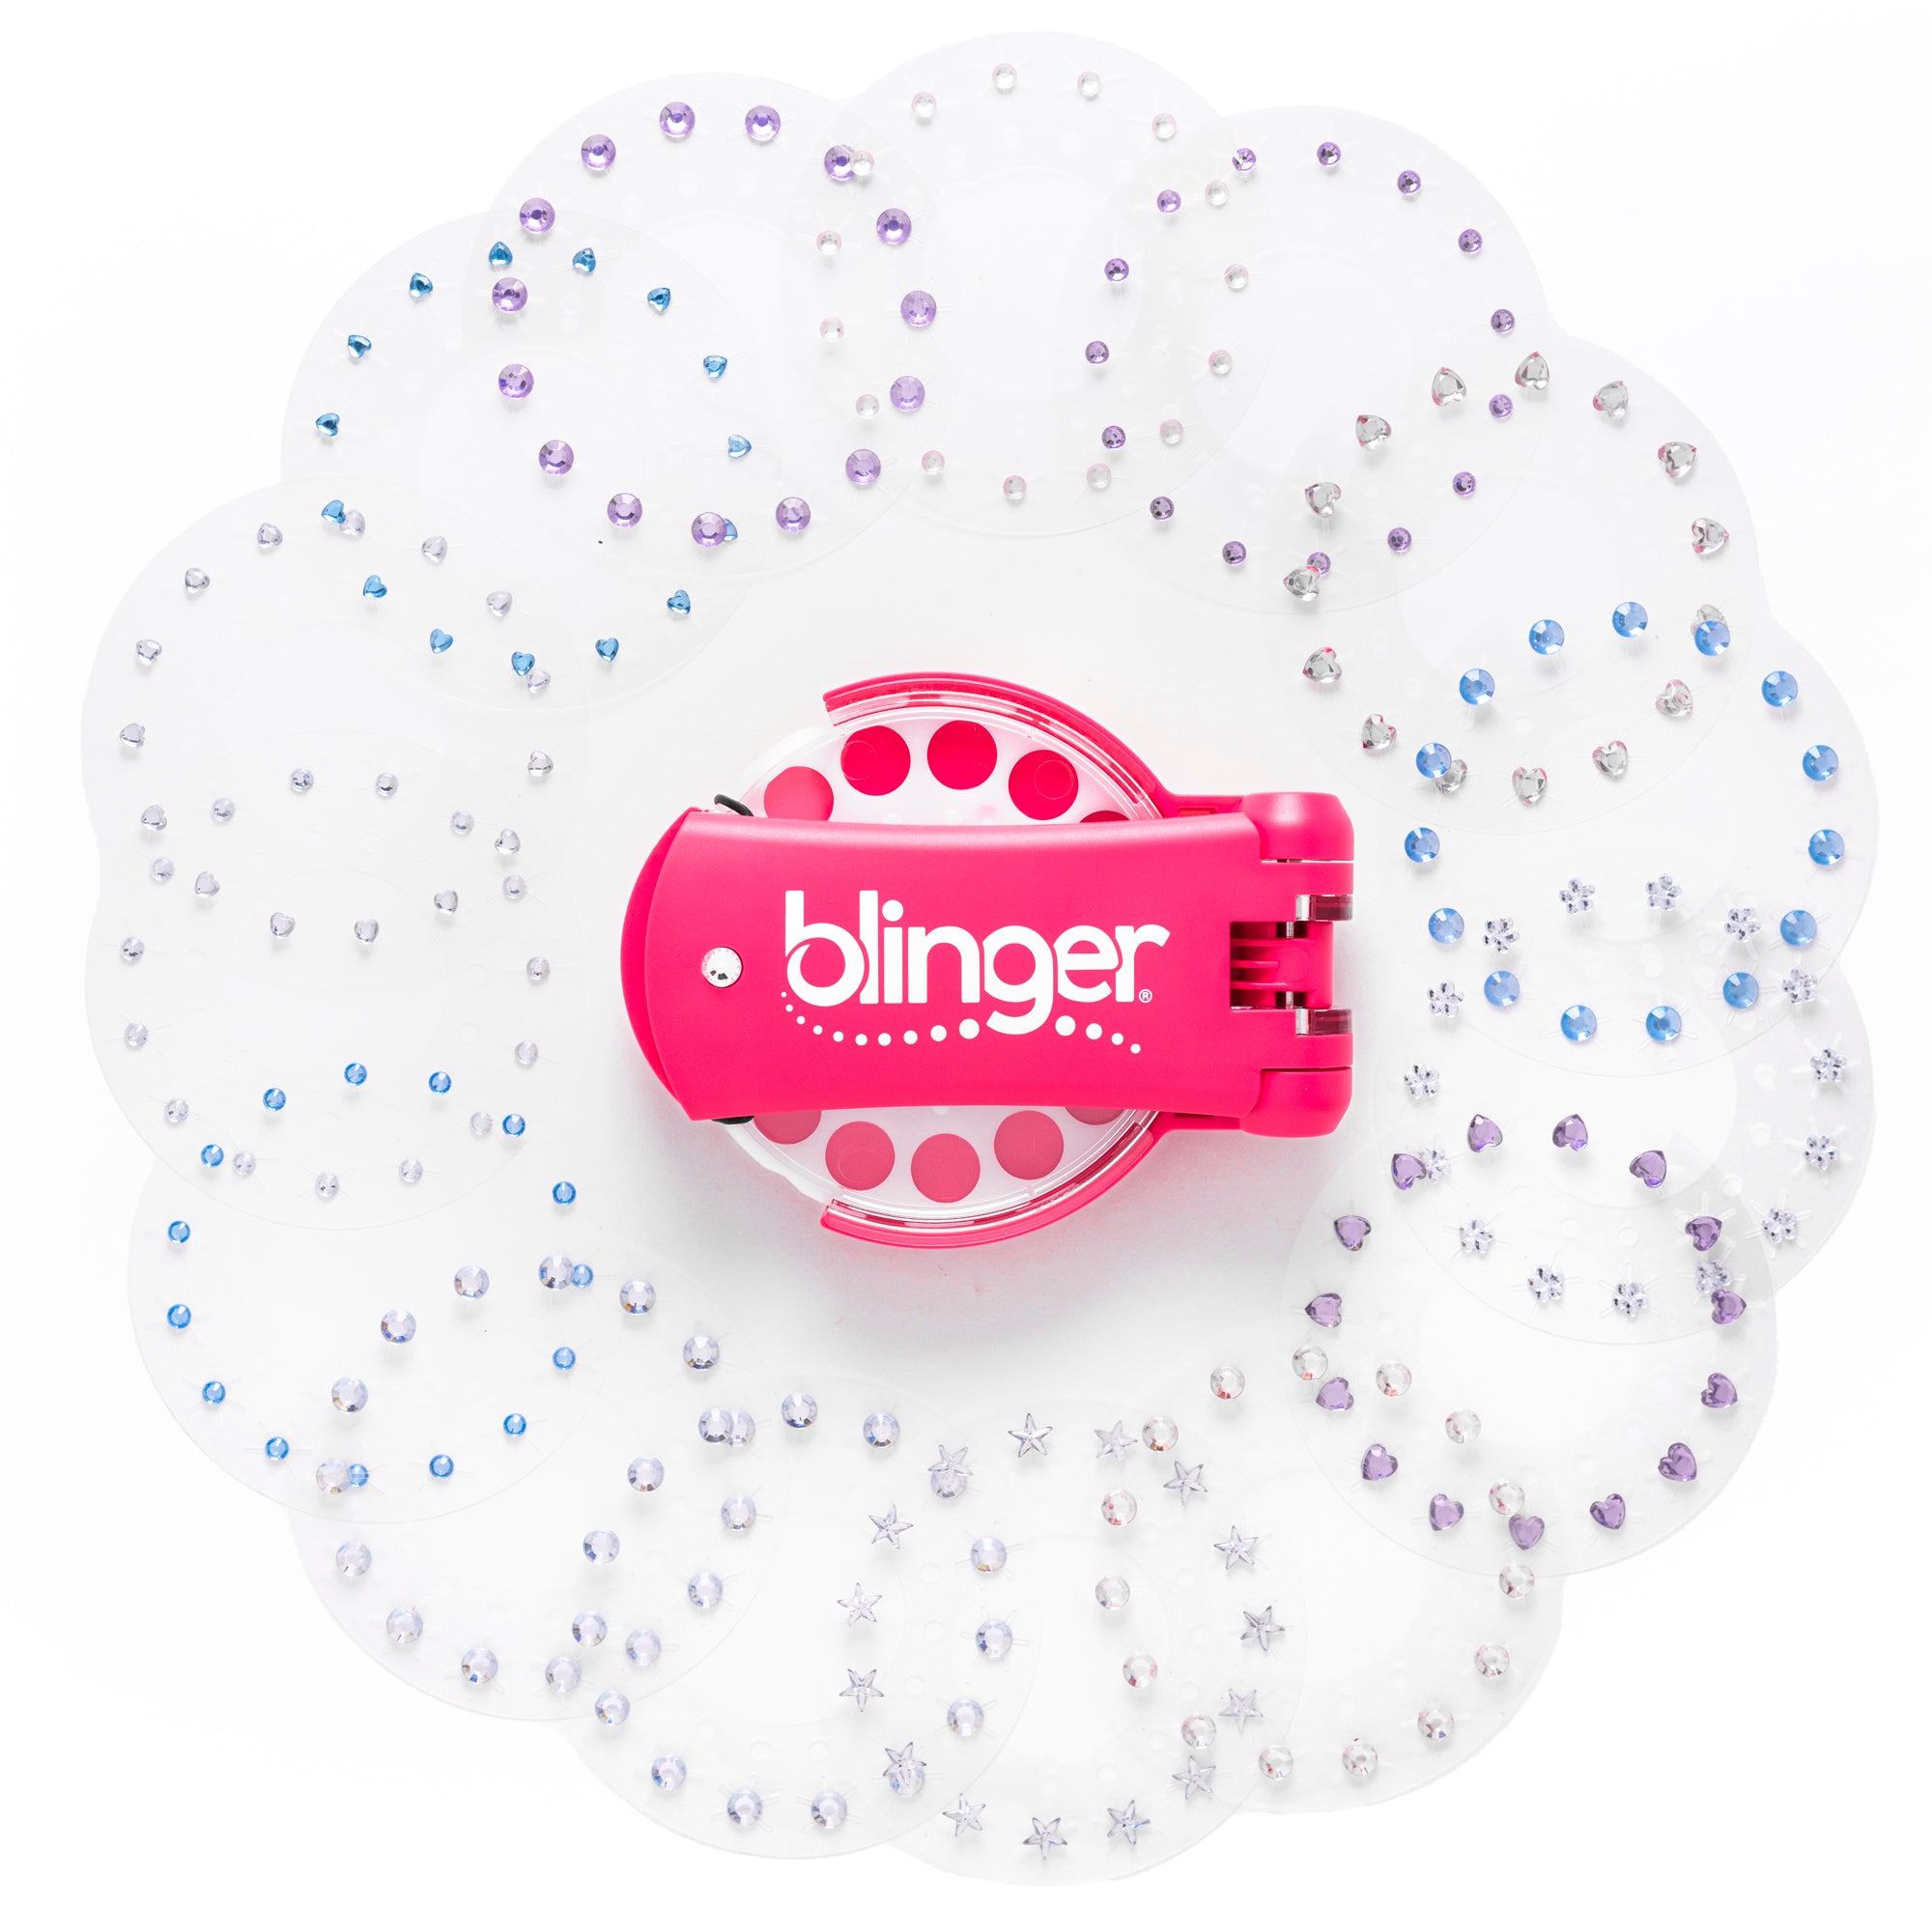 blinger® Glam Collection Starter Kit with blinger® Gem Stamper + 225 Colorful Acrylic Rhinestones